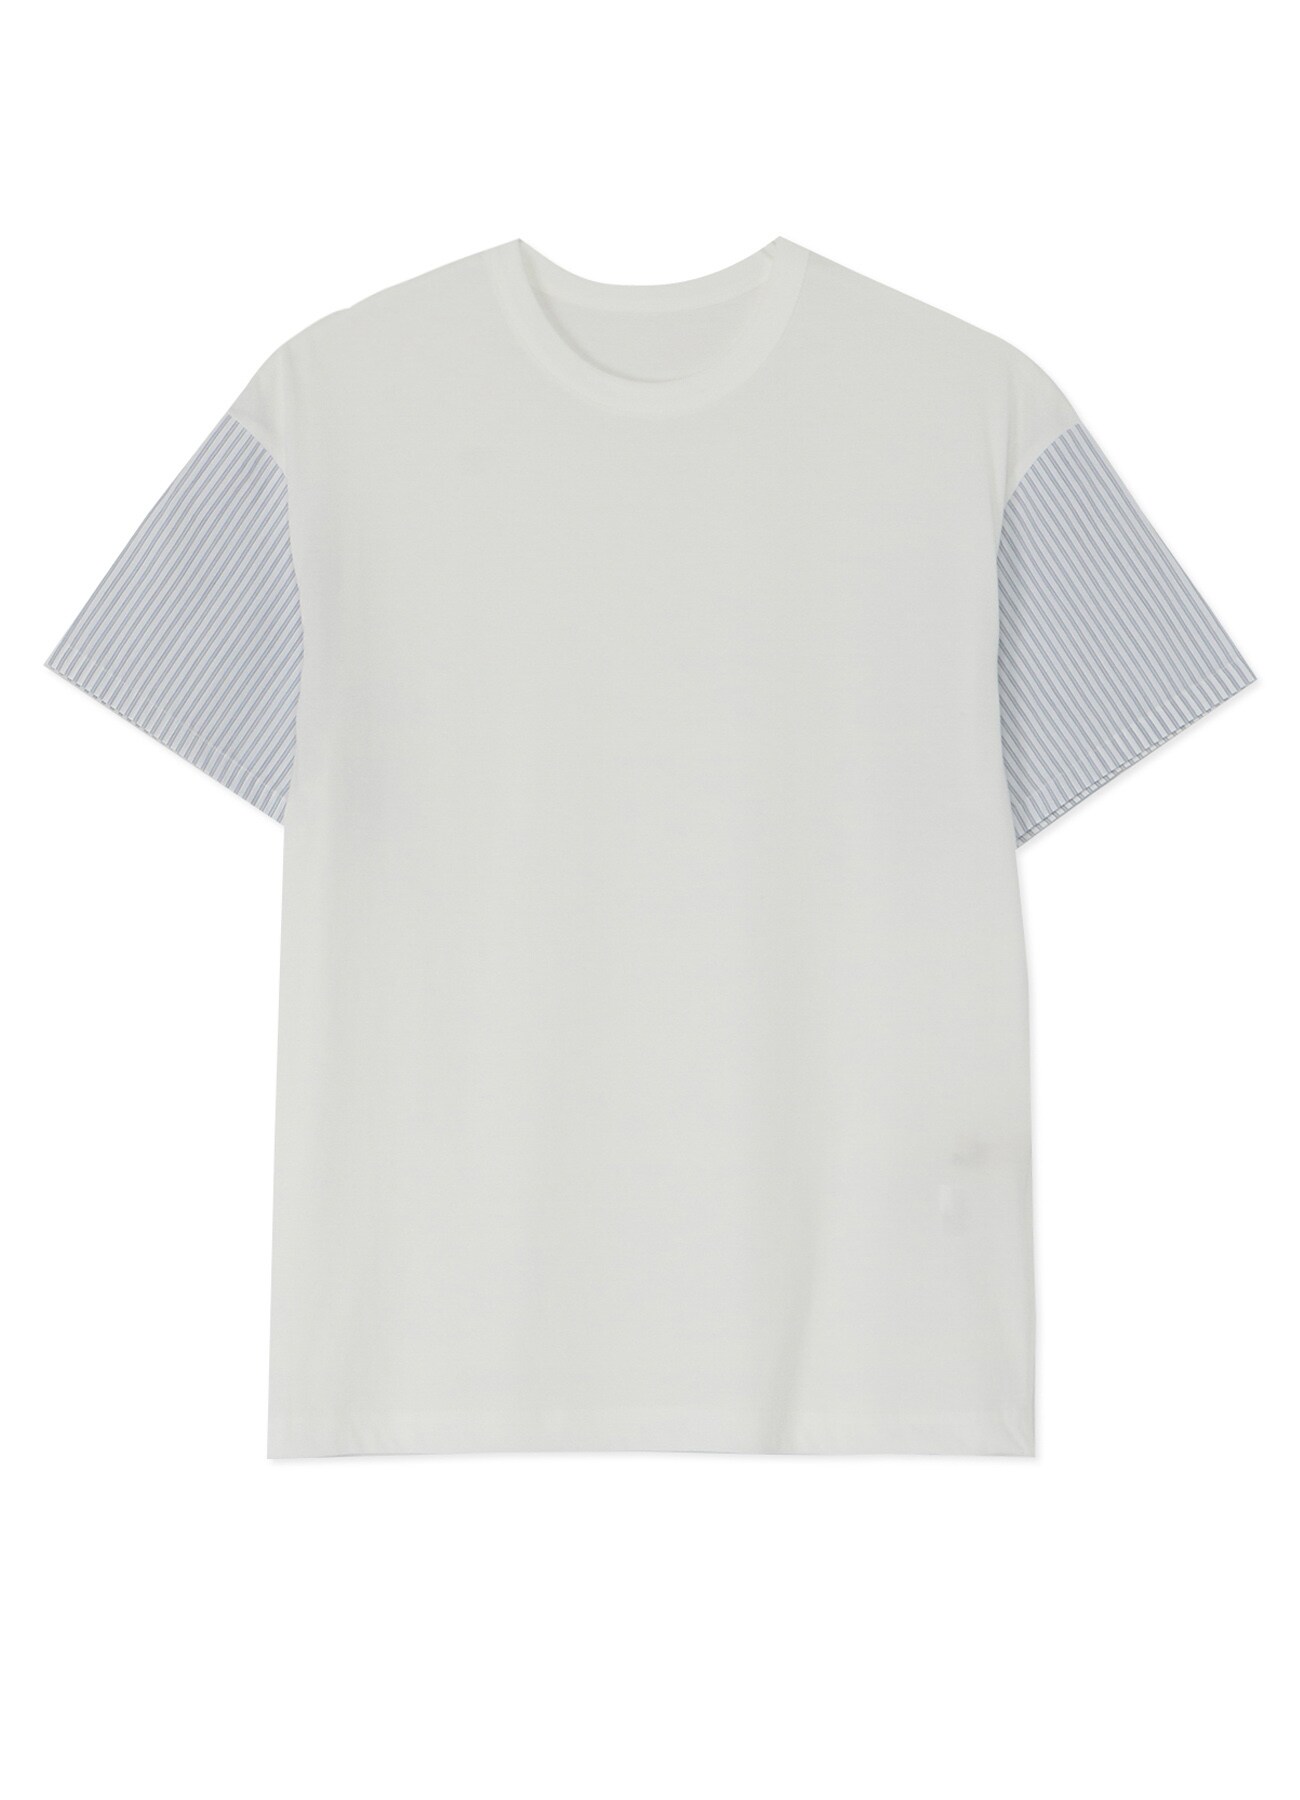 Stripe/Jersey combination Shirt docking short sleeves T